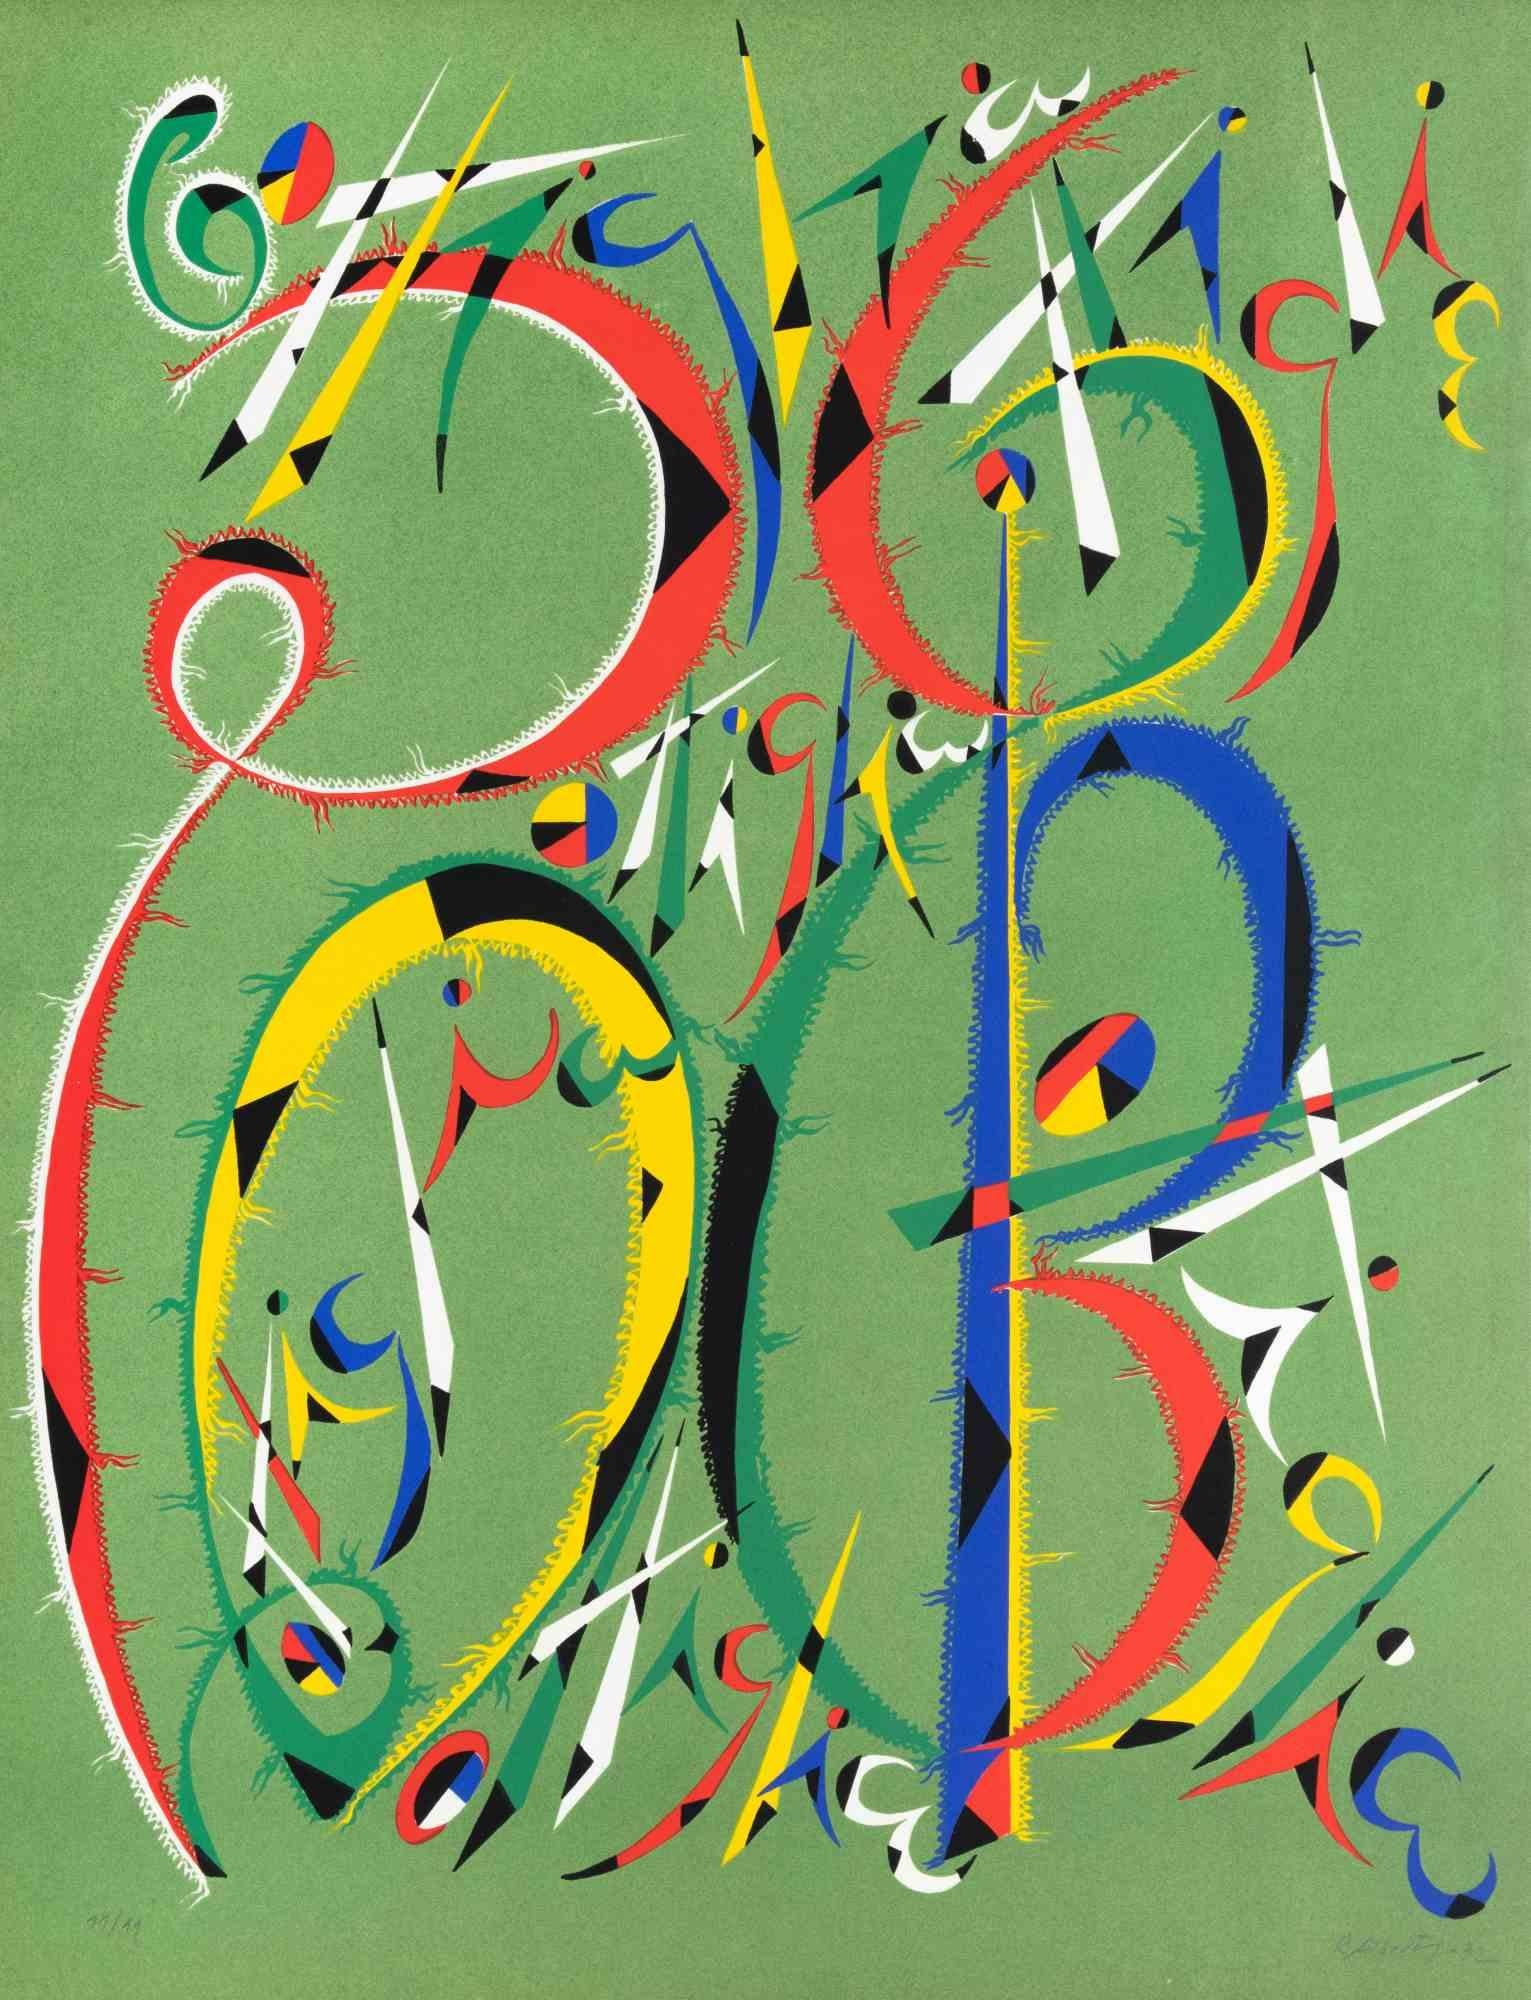 Letter B - Lithograph by Rafael Alberti - 1972